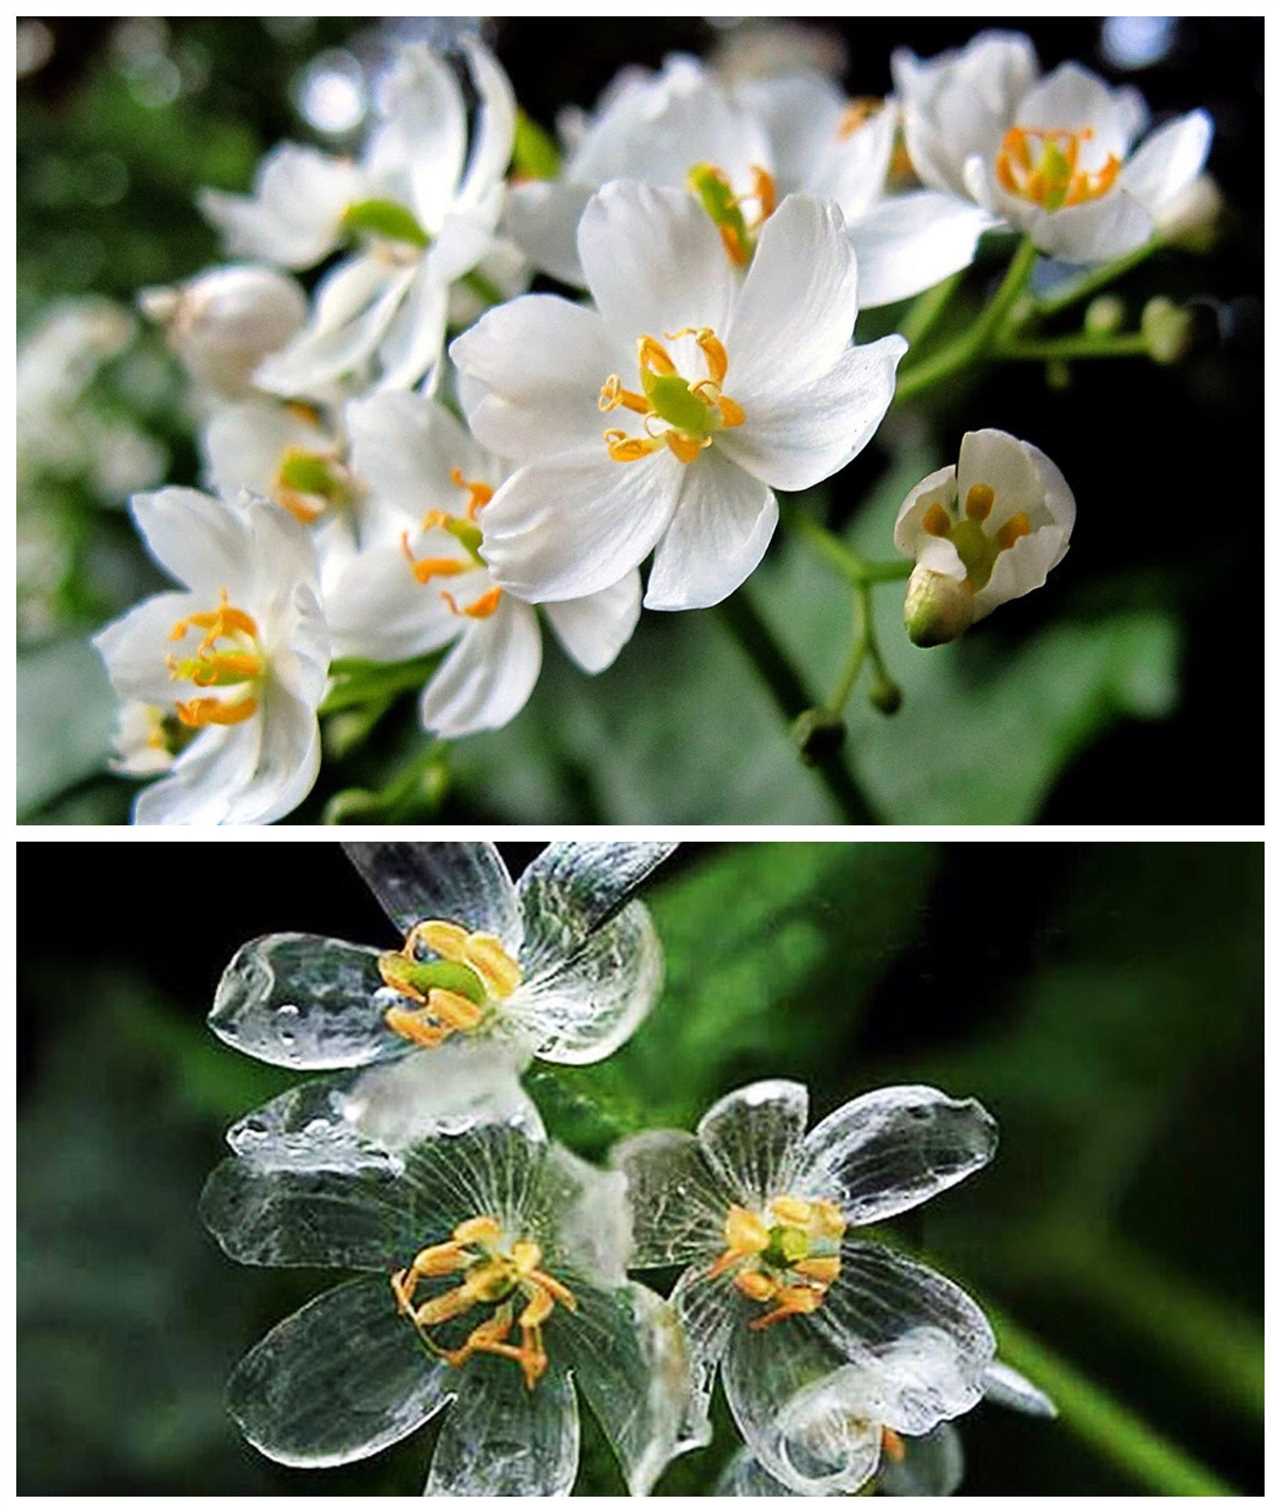 Skeleton Flower A Fascinating Plant with Translucent Petals